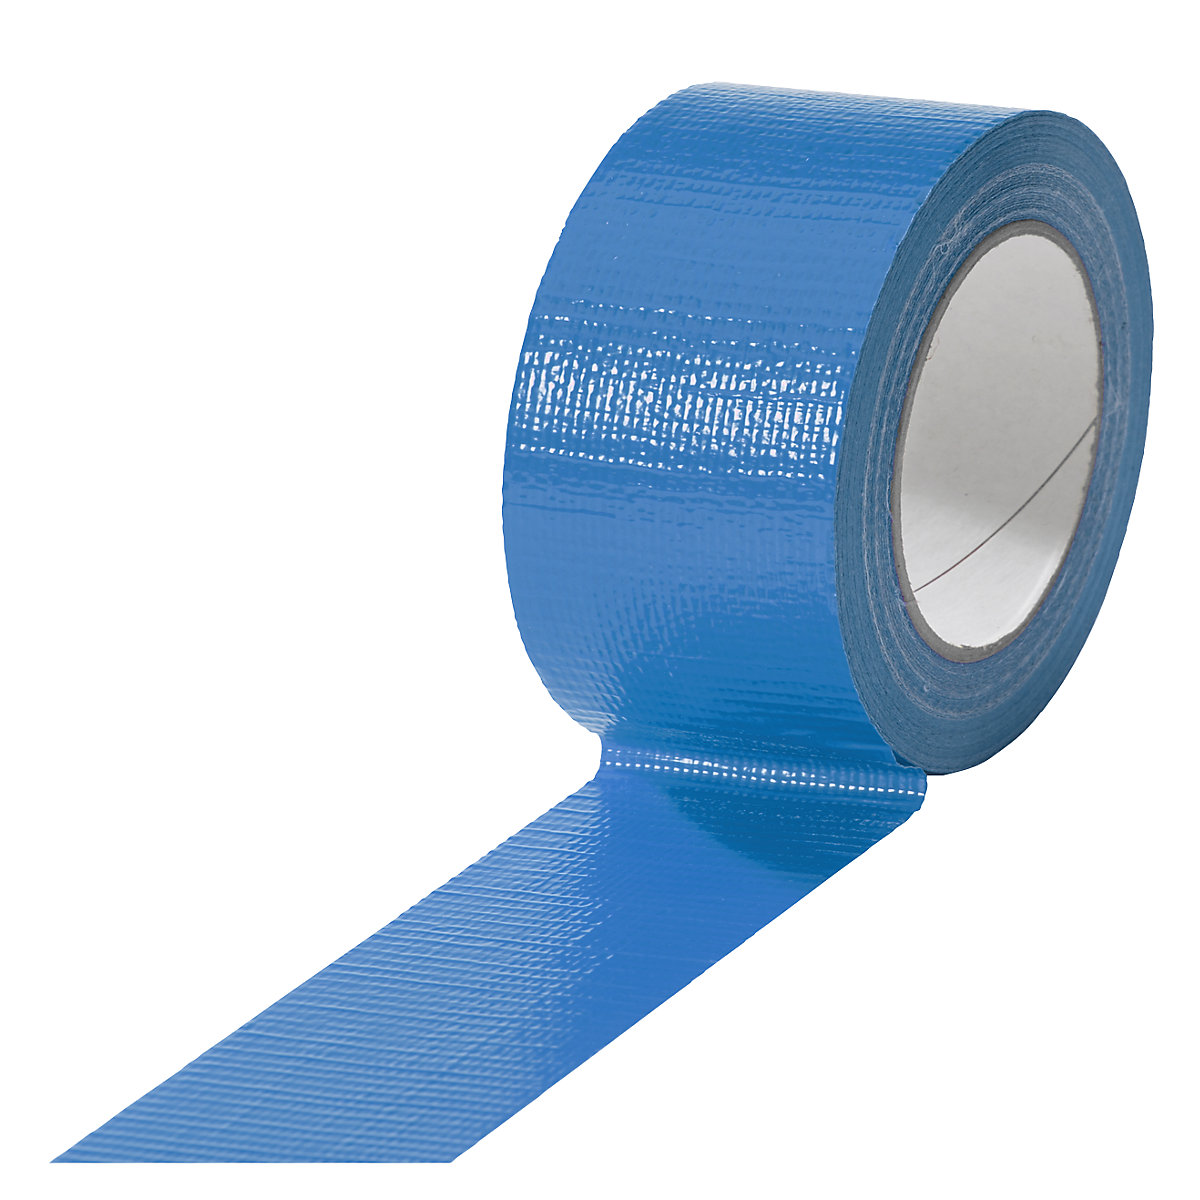 Tkaninová páska, v různých barvách, bal.j. 18 rolí, modrá, šířka pásky 50 mm-9